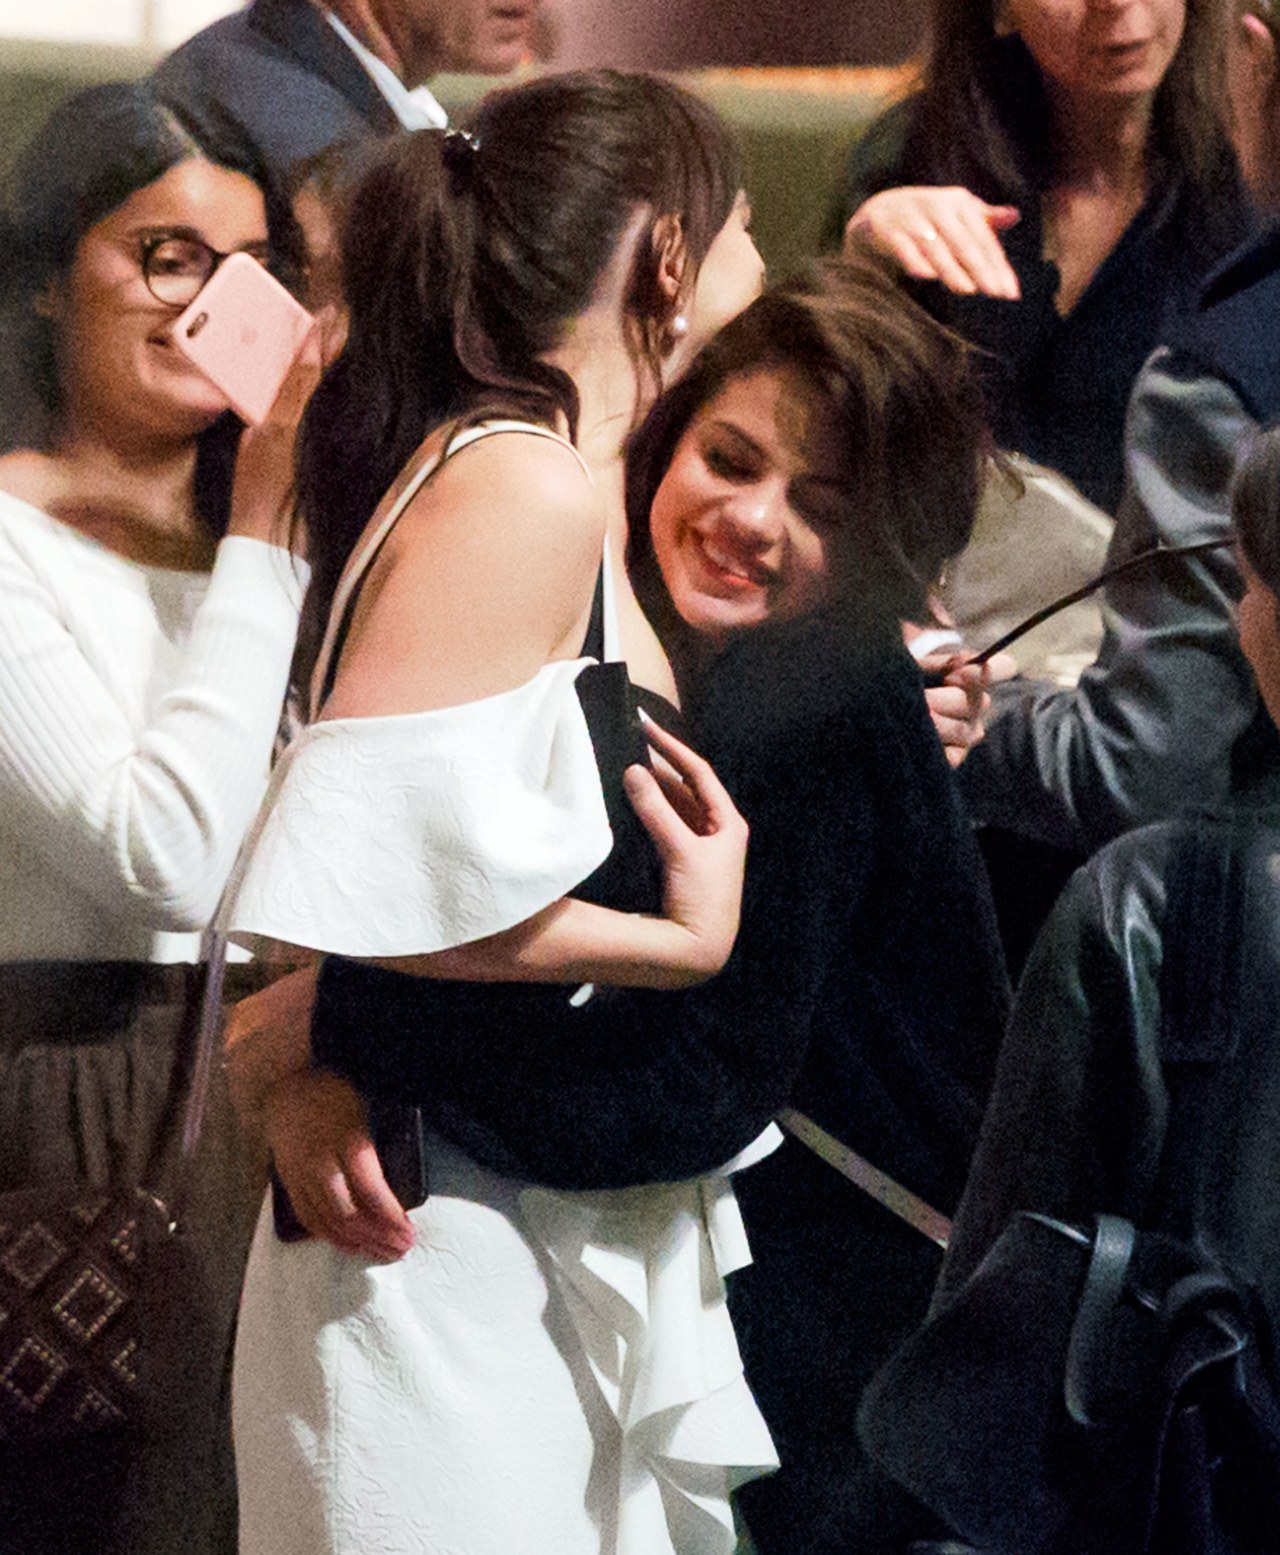 حصرية: Selena Gomez surprises Dakota Johnson on Dakota's 27th birthday by giving her a hug at and NY Film Festival event